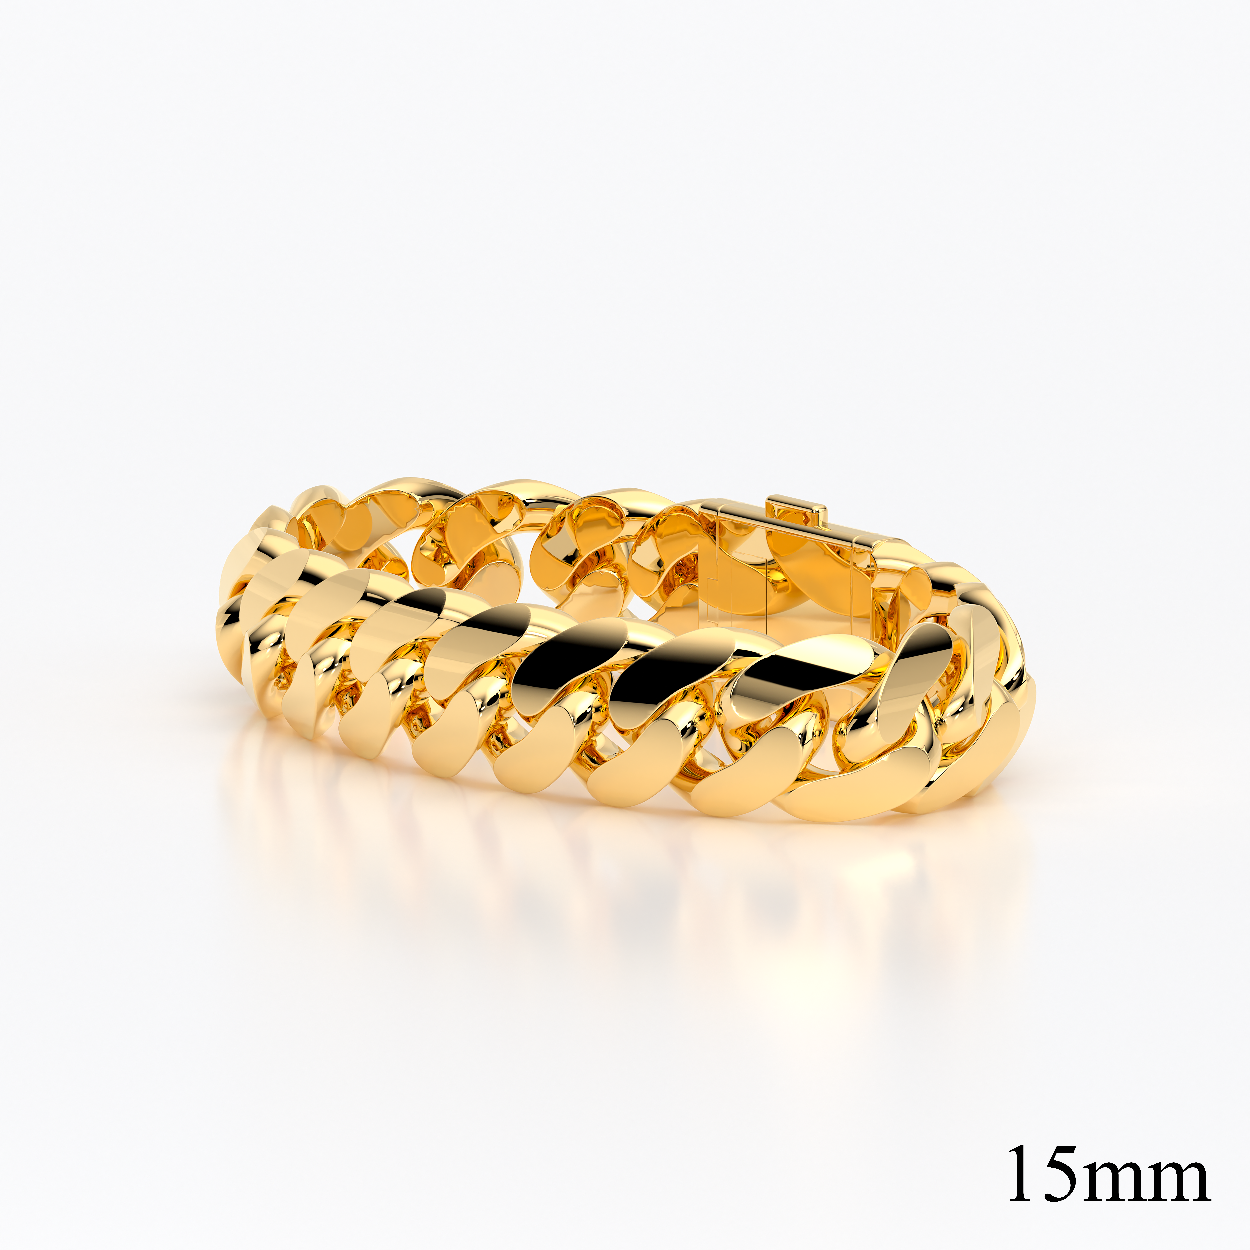 15mm Solid Gold Cuban Chain Link Bracelet